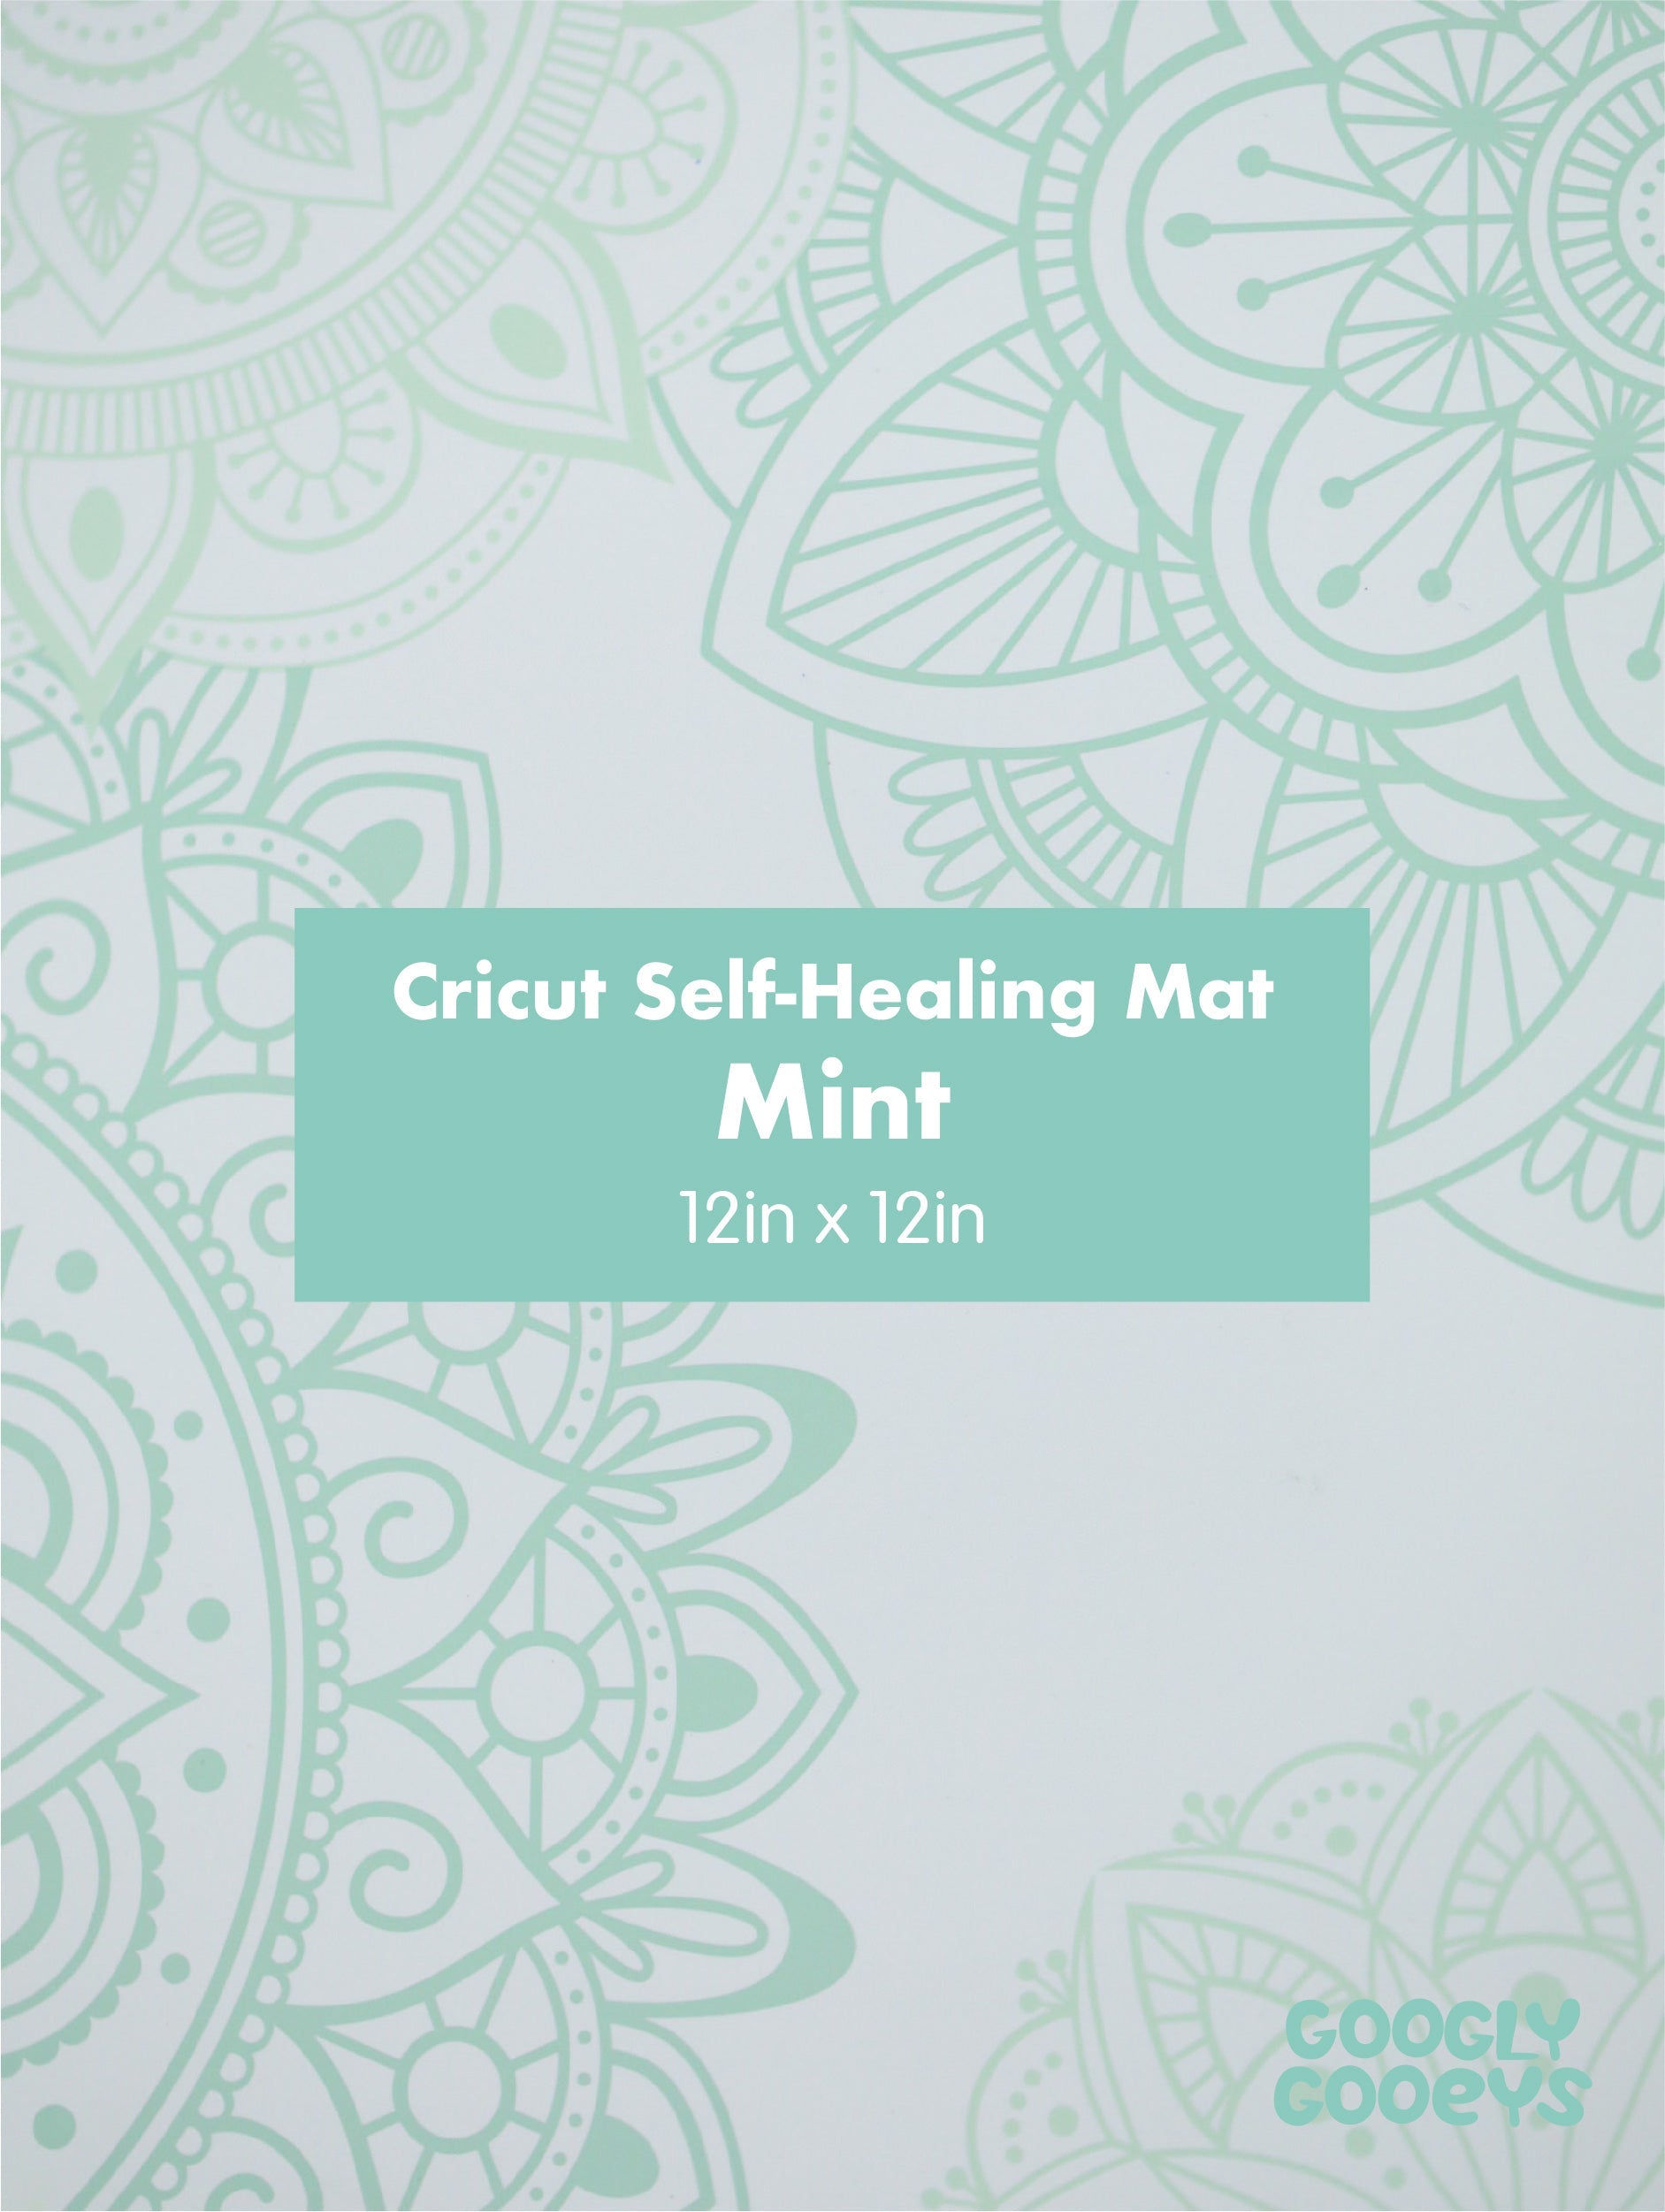 Cricut Mint Decorative Self Healing Mat 12x12 for Crafting DIY Projects